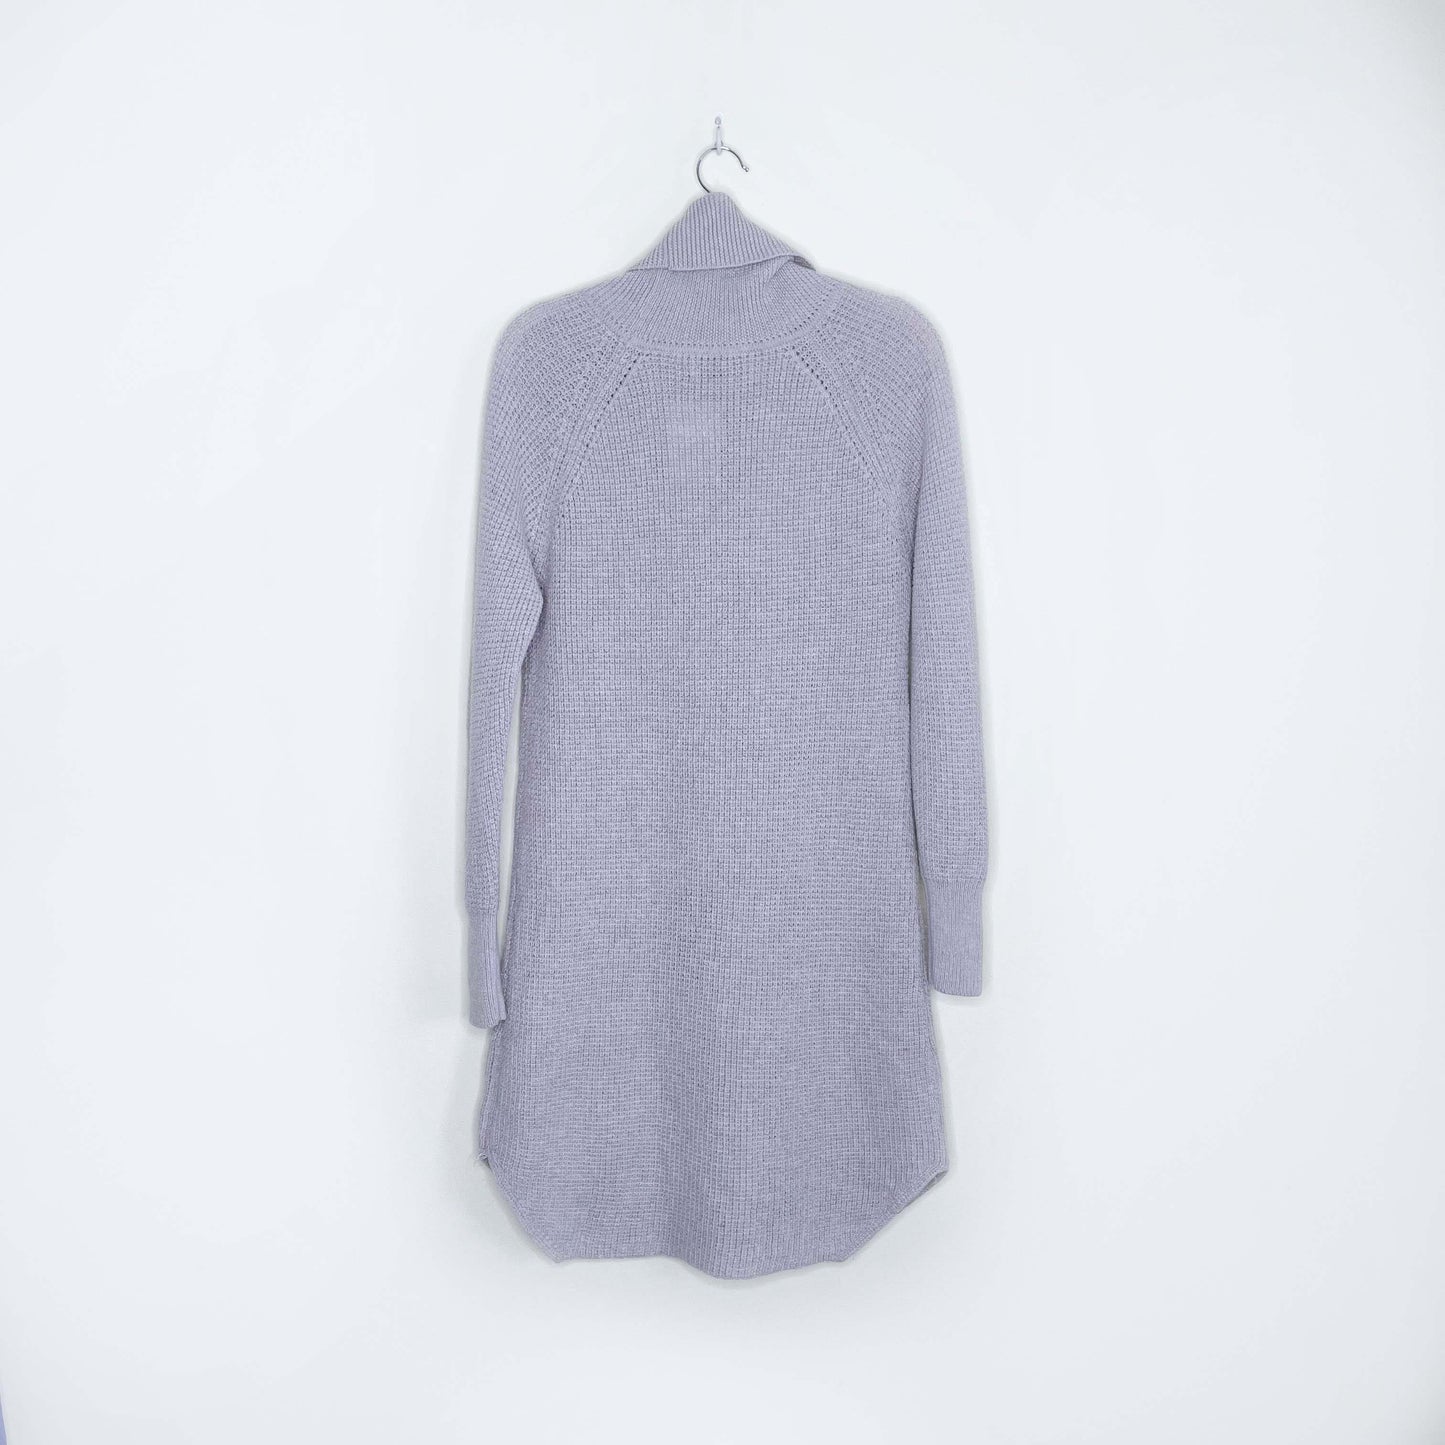 wilfred free bianca grey merino wool sweater dress - size medium